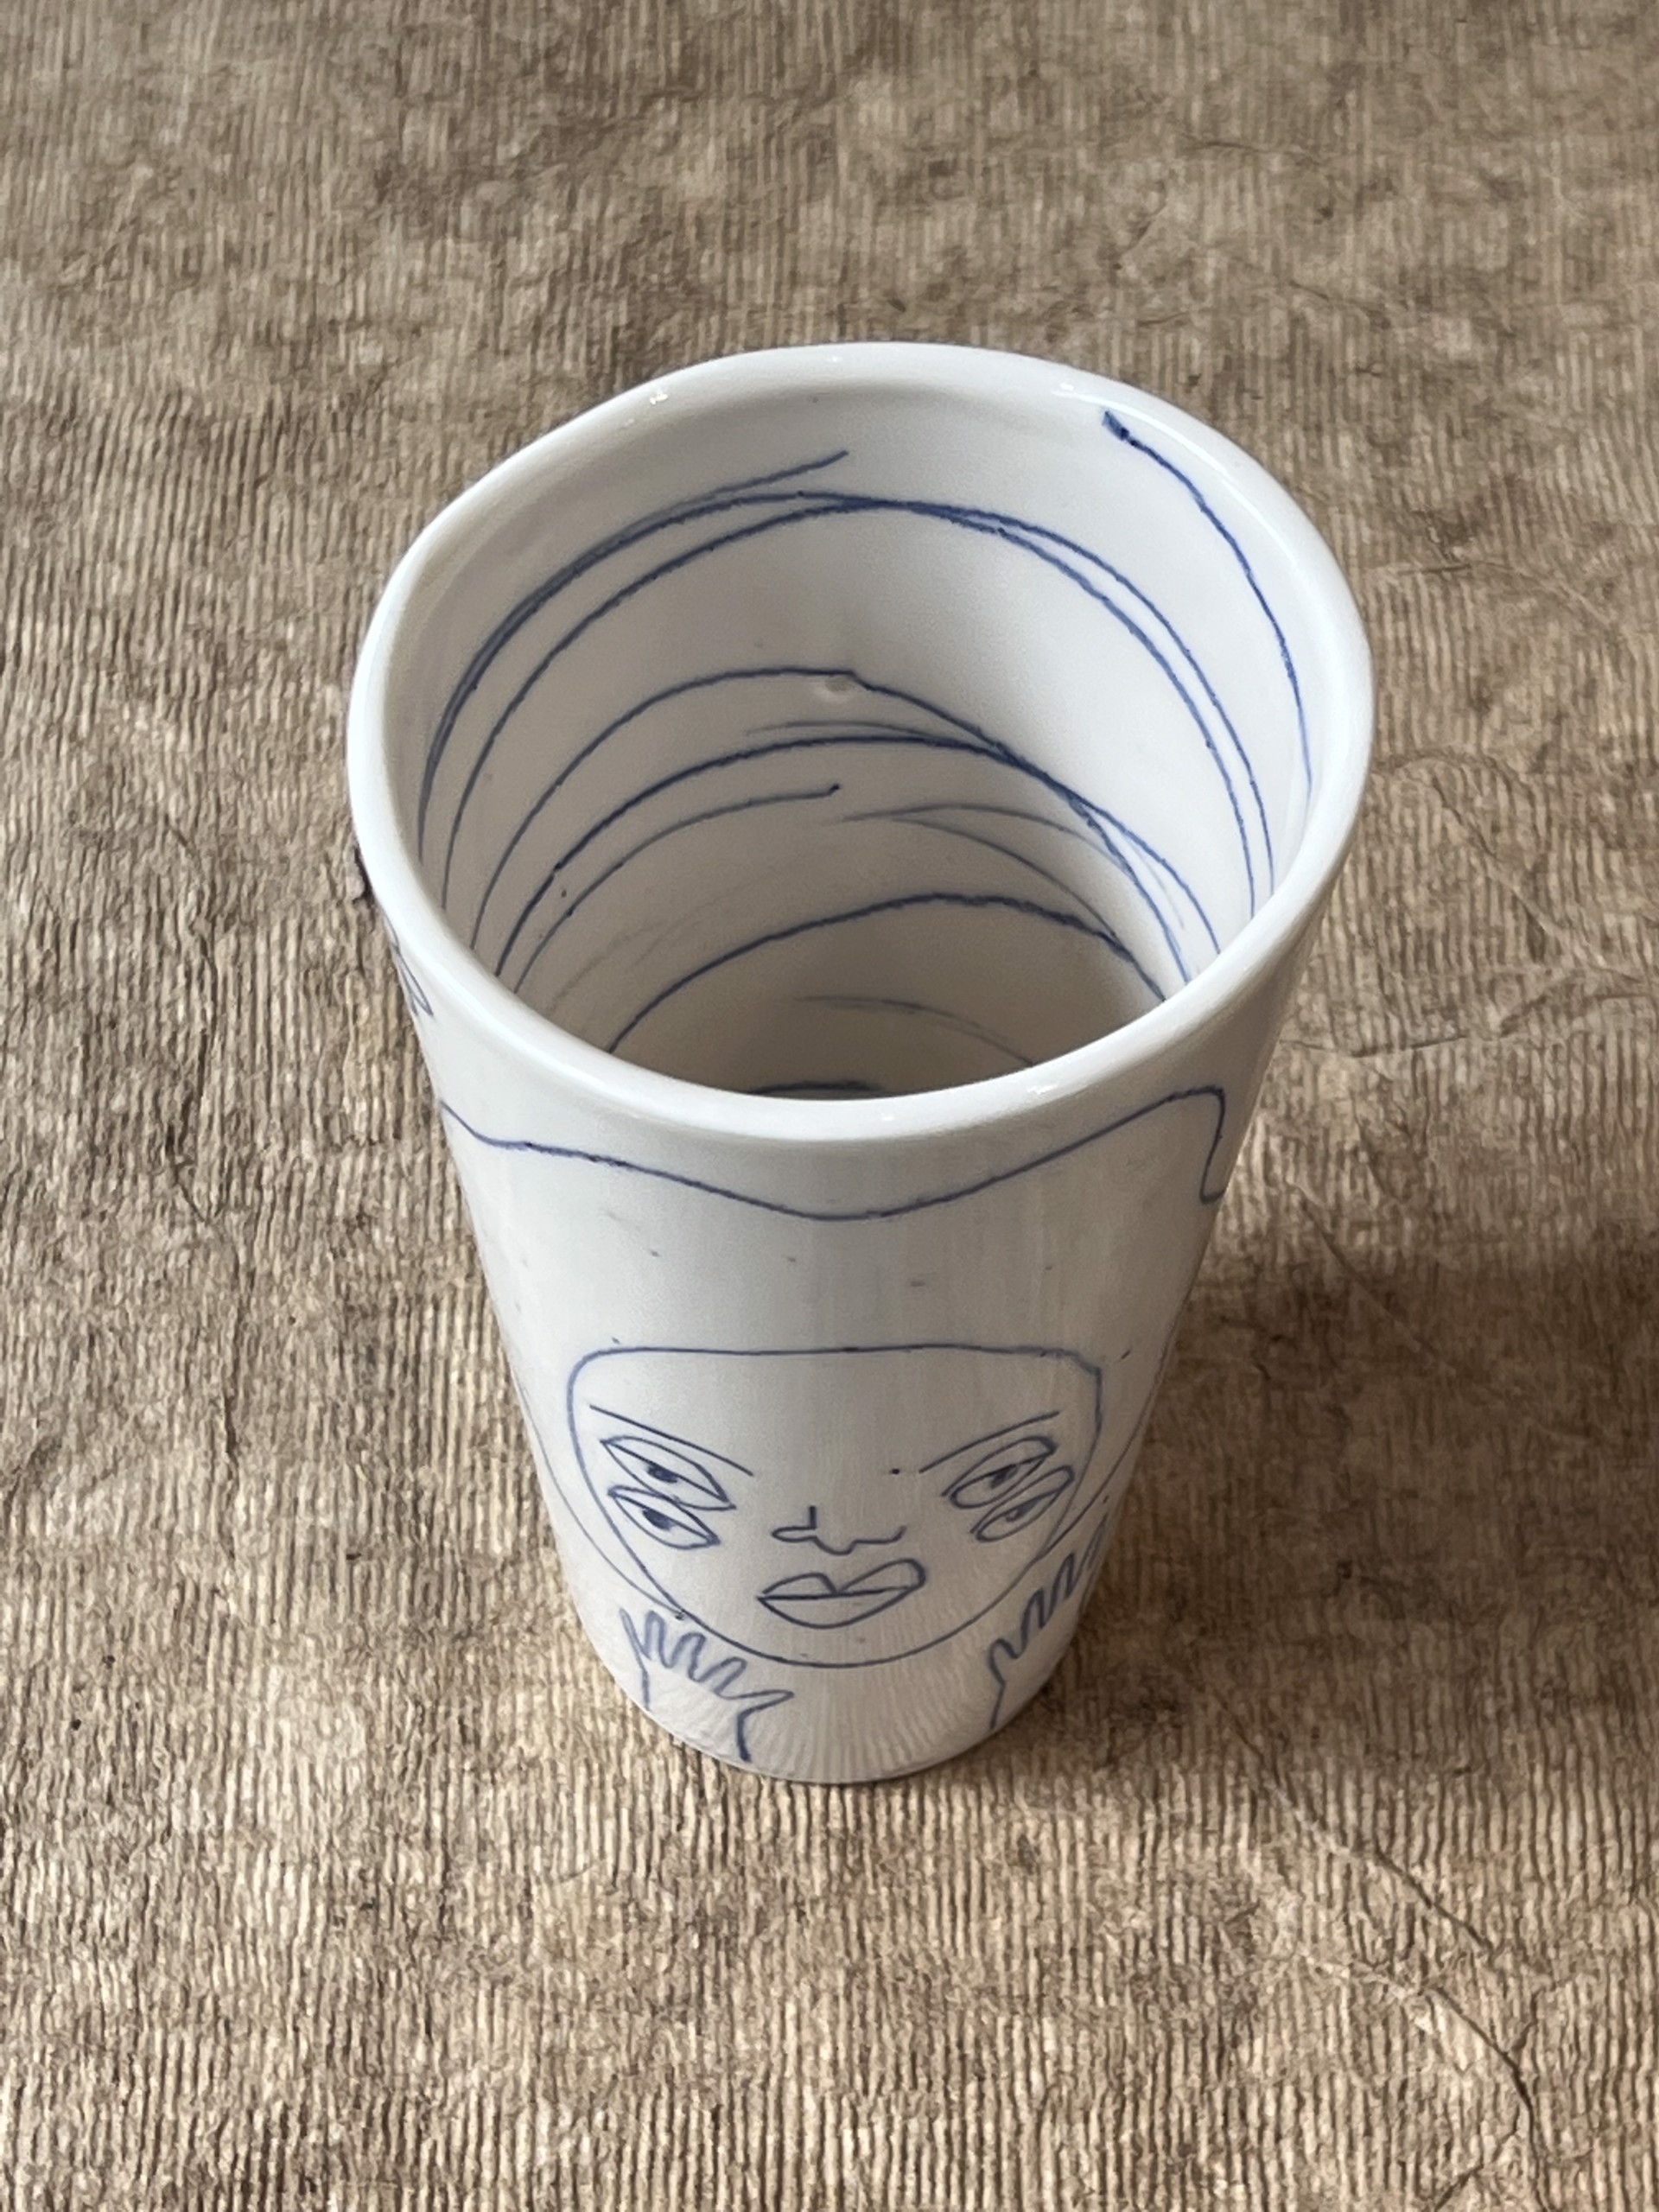 Lady Hummel Cup No. 3 by Sarah Hummel Jones